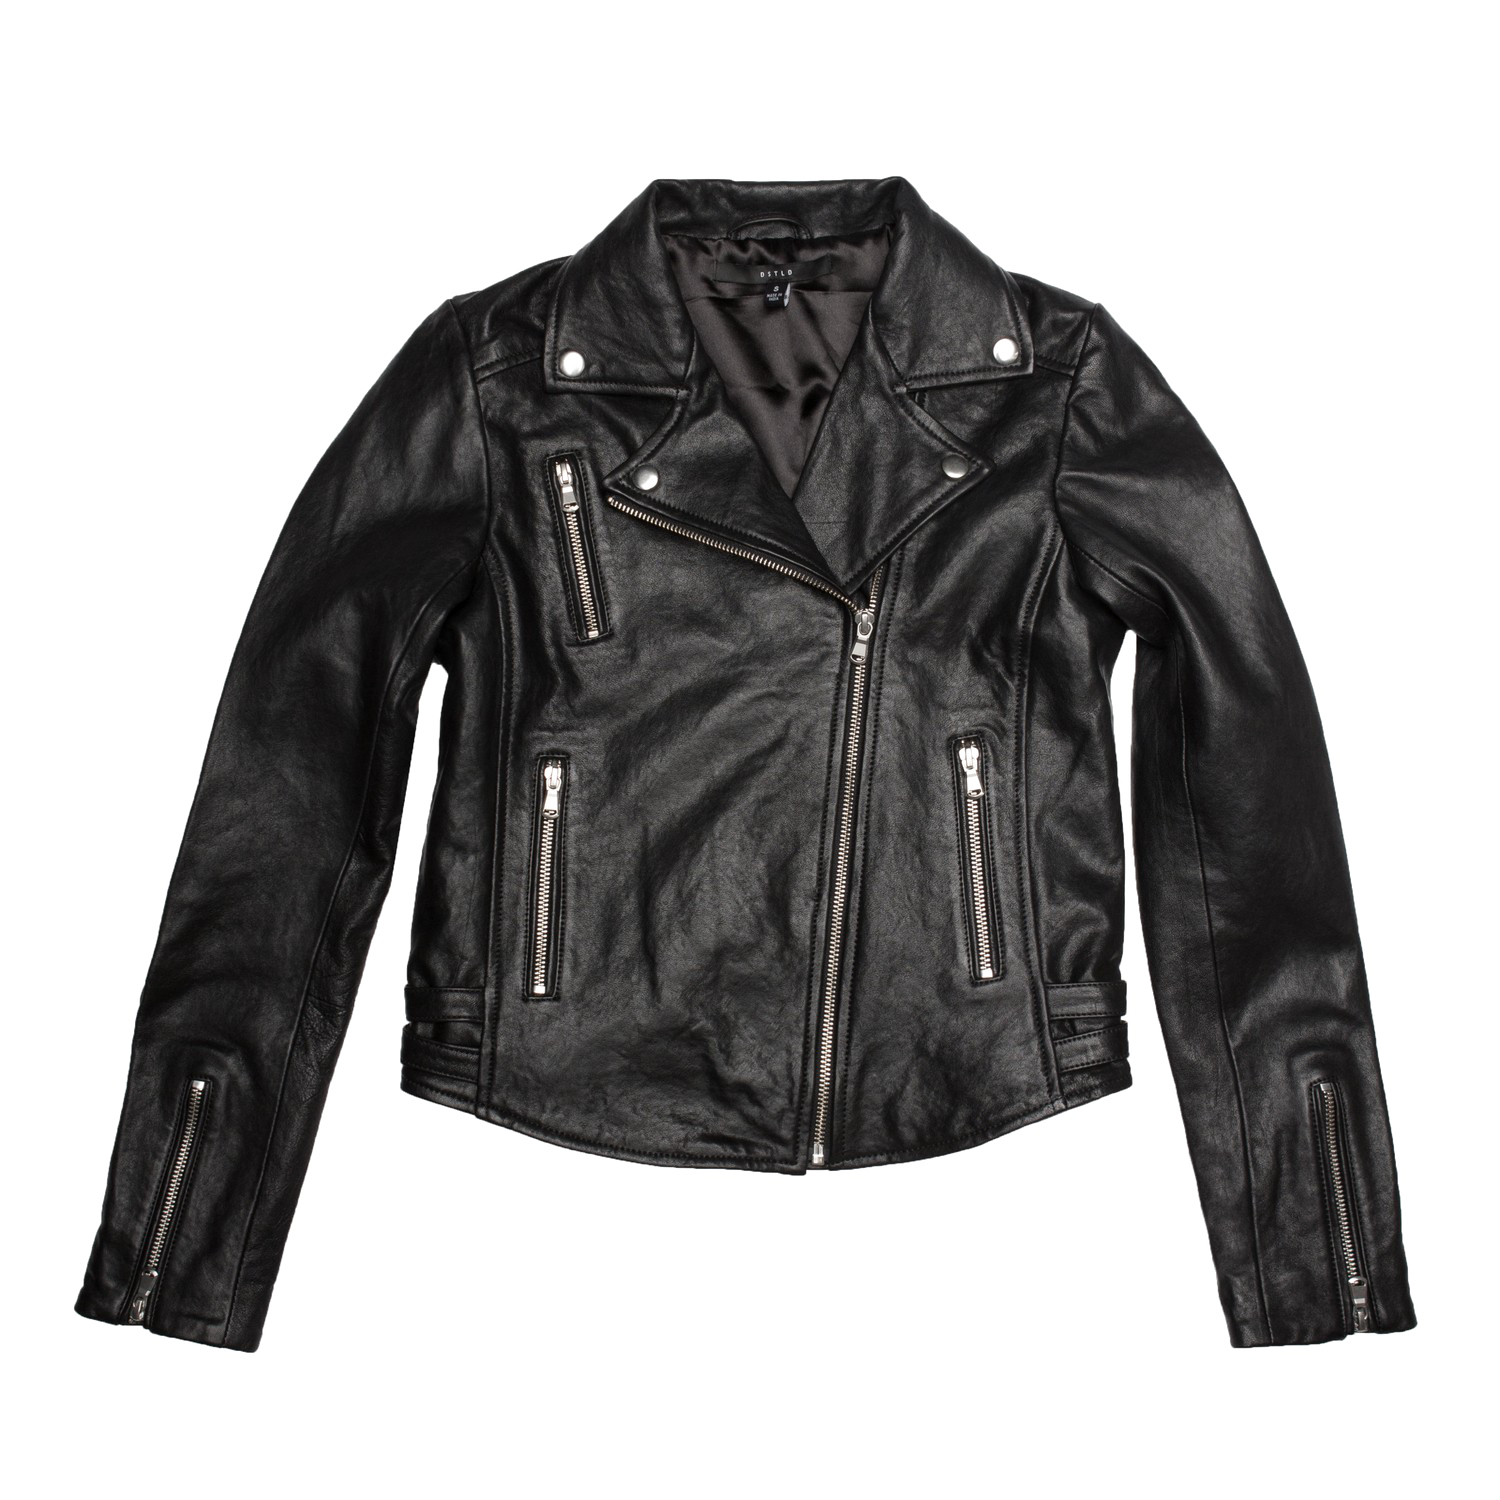 Leather Jacket PNG Image